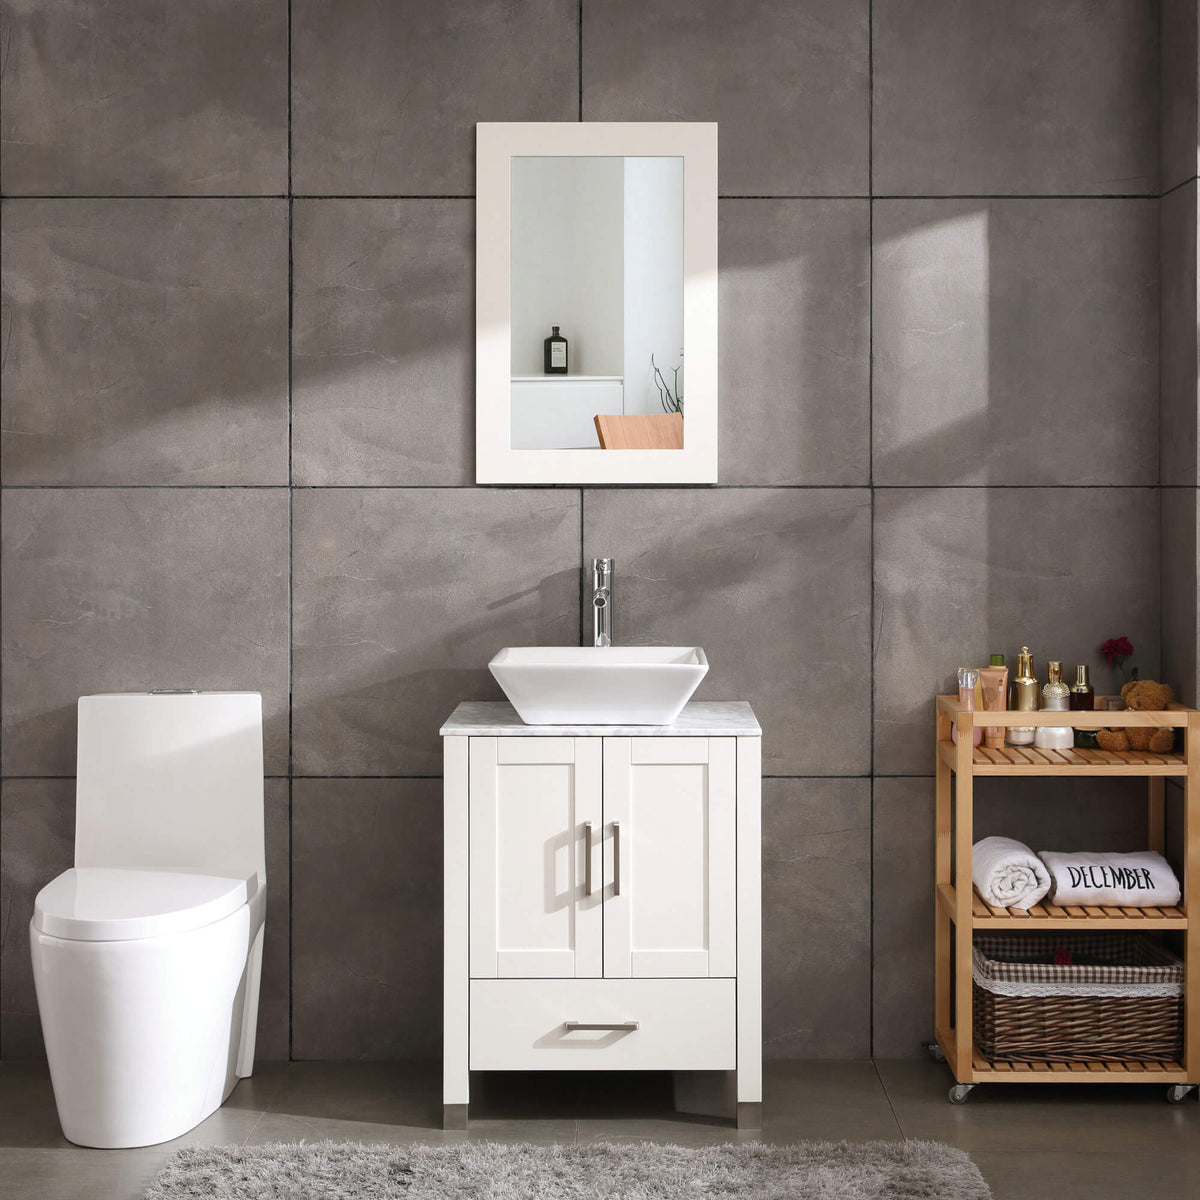 24” White Bathroom Vanity Marble Top Combo